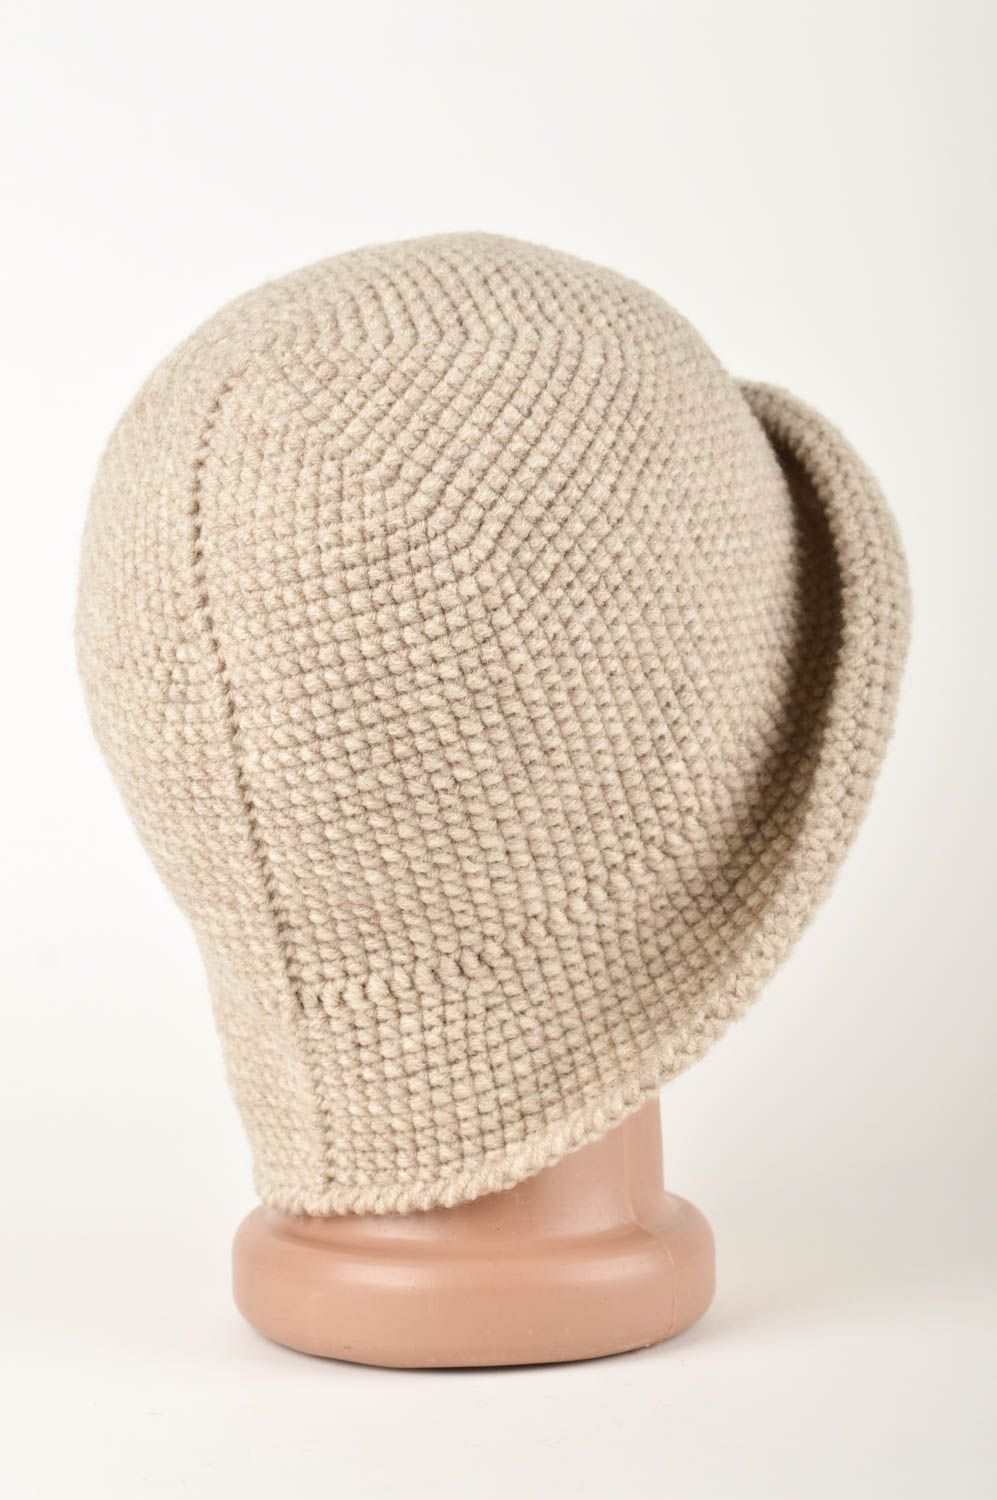 Handmade crocheted headwear unusual designer cap warm winter accessories photo 5